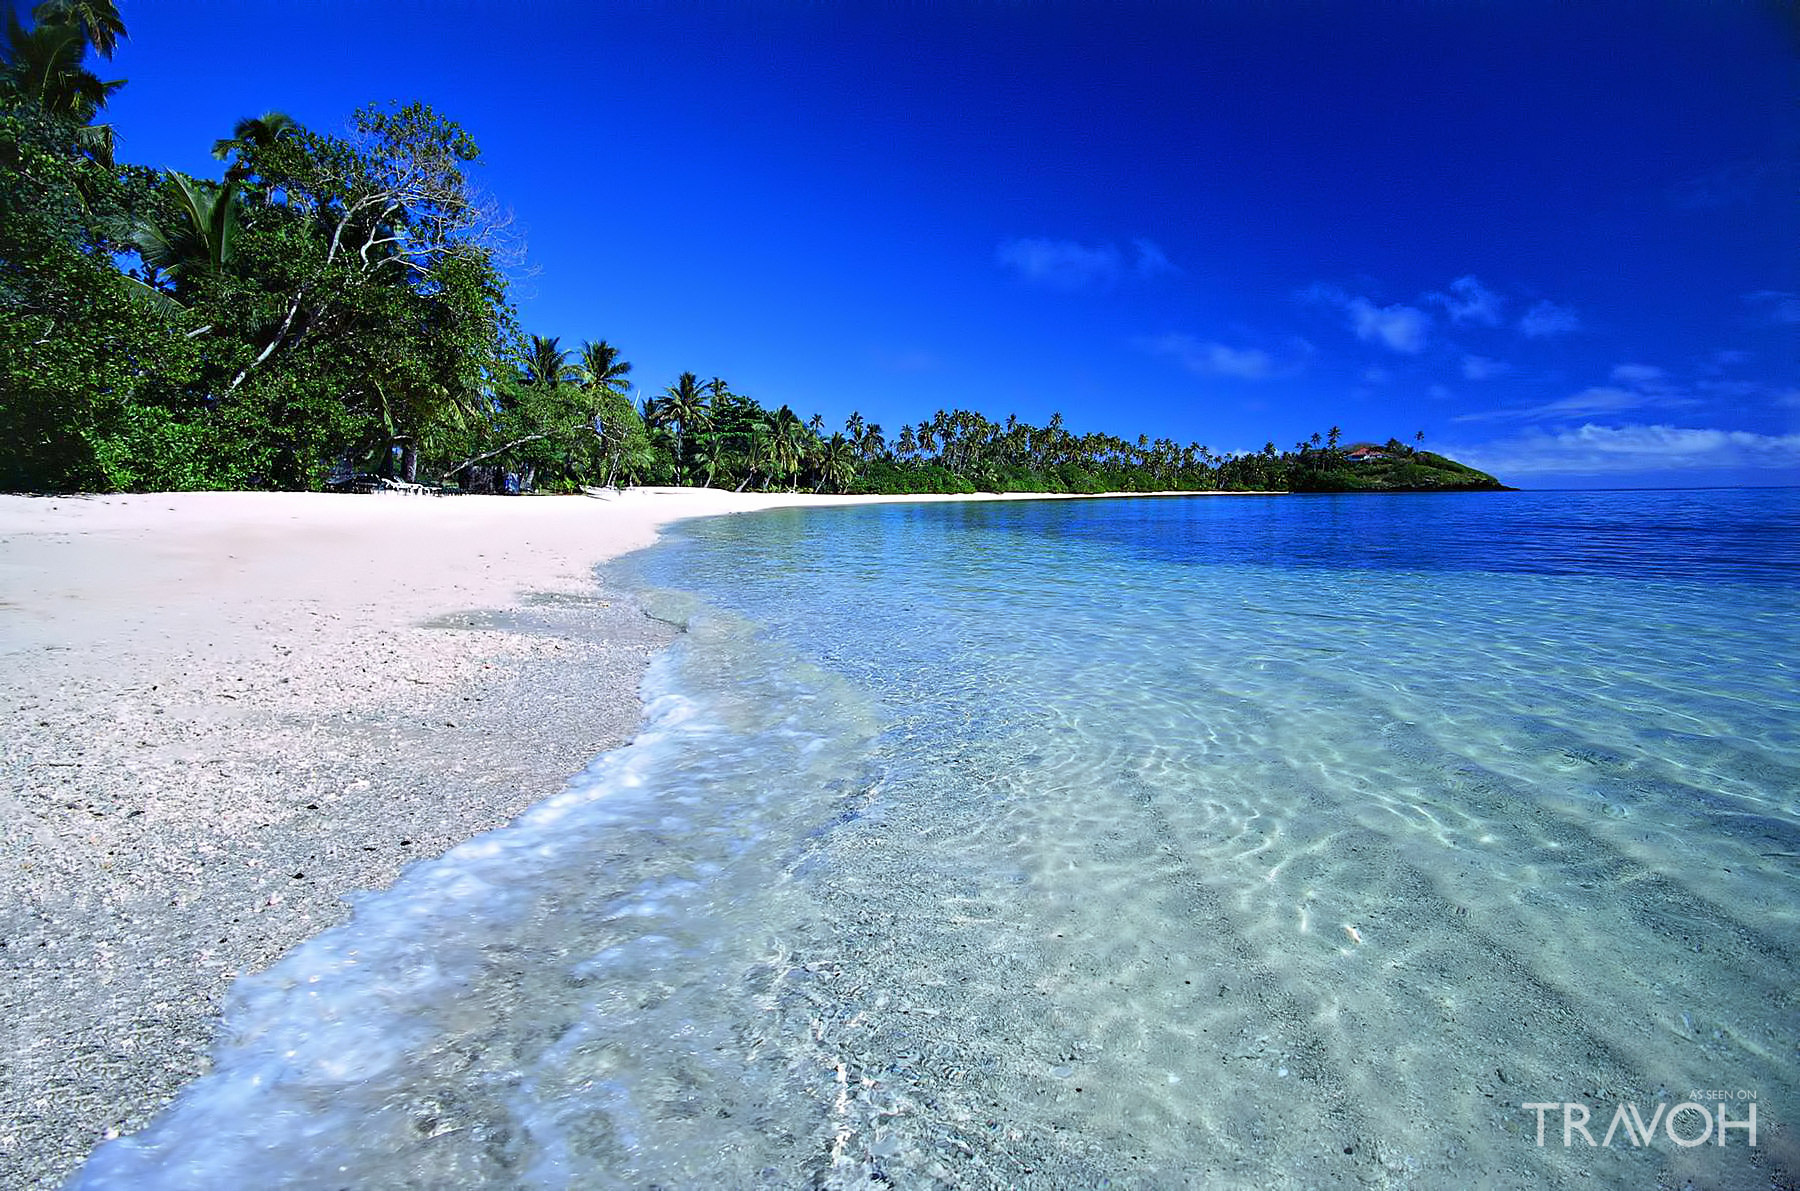 Wakaya Island Resort – Exploring 10 of the Top Beach Locations on the Islands of Fiji